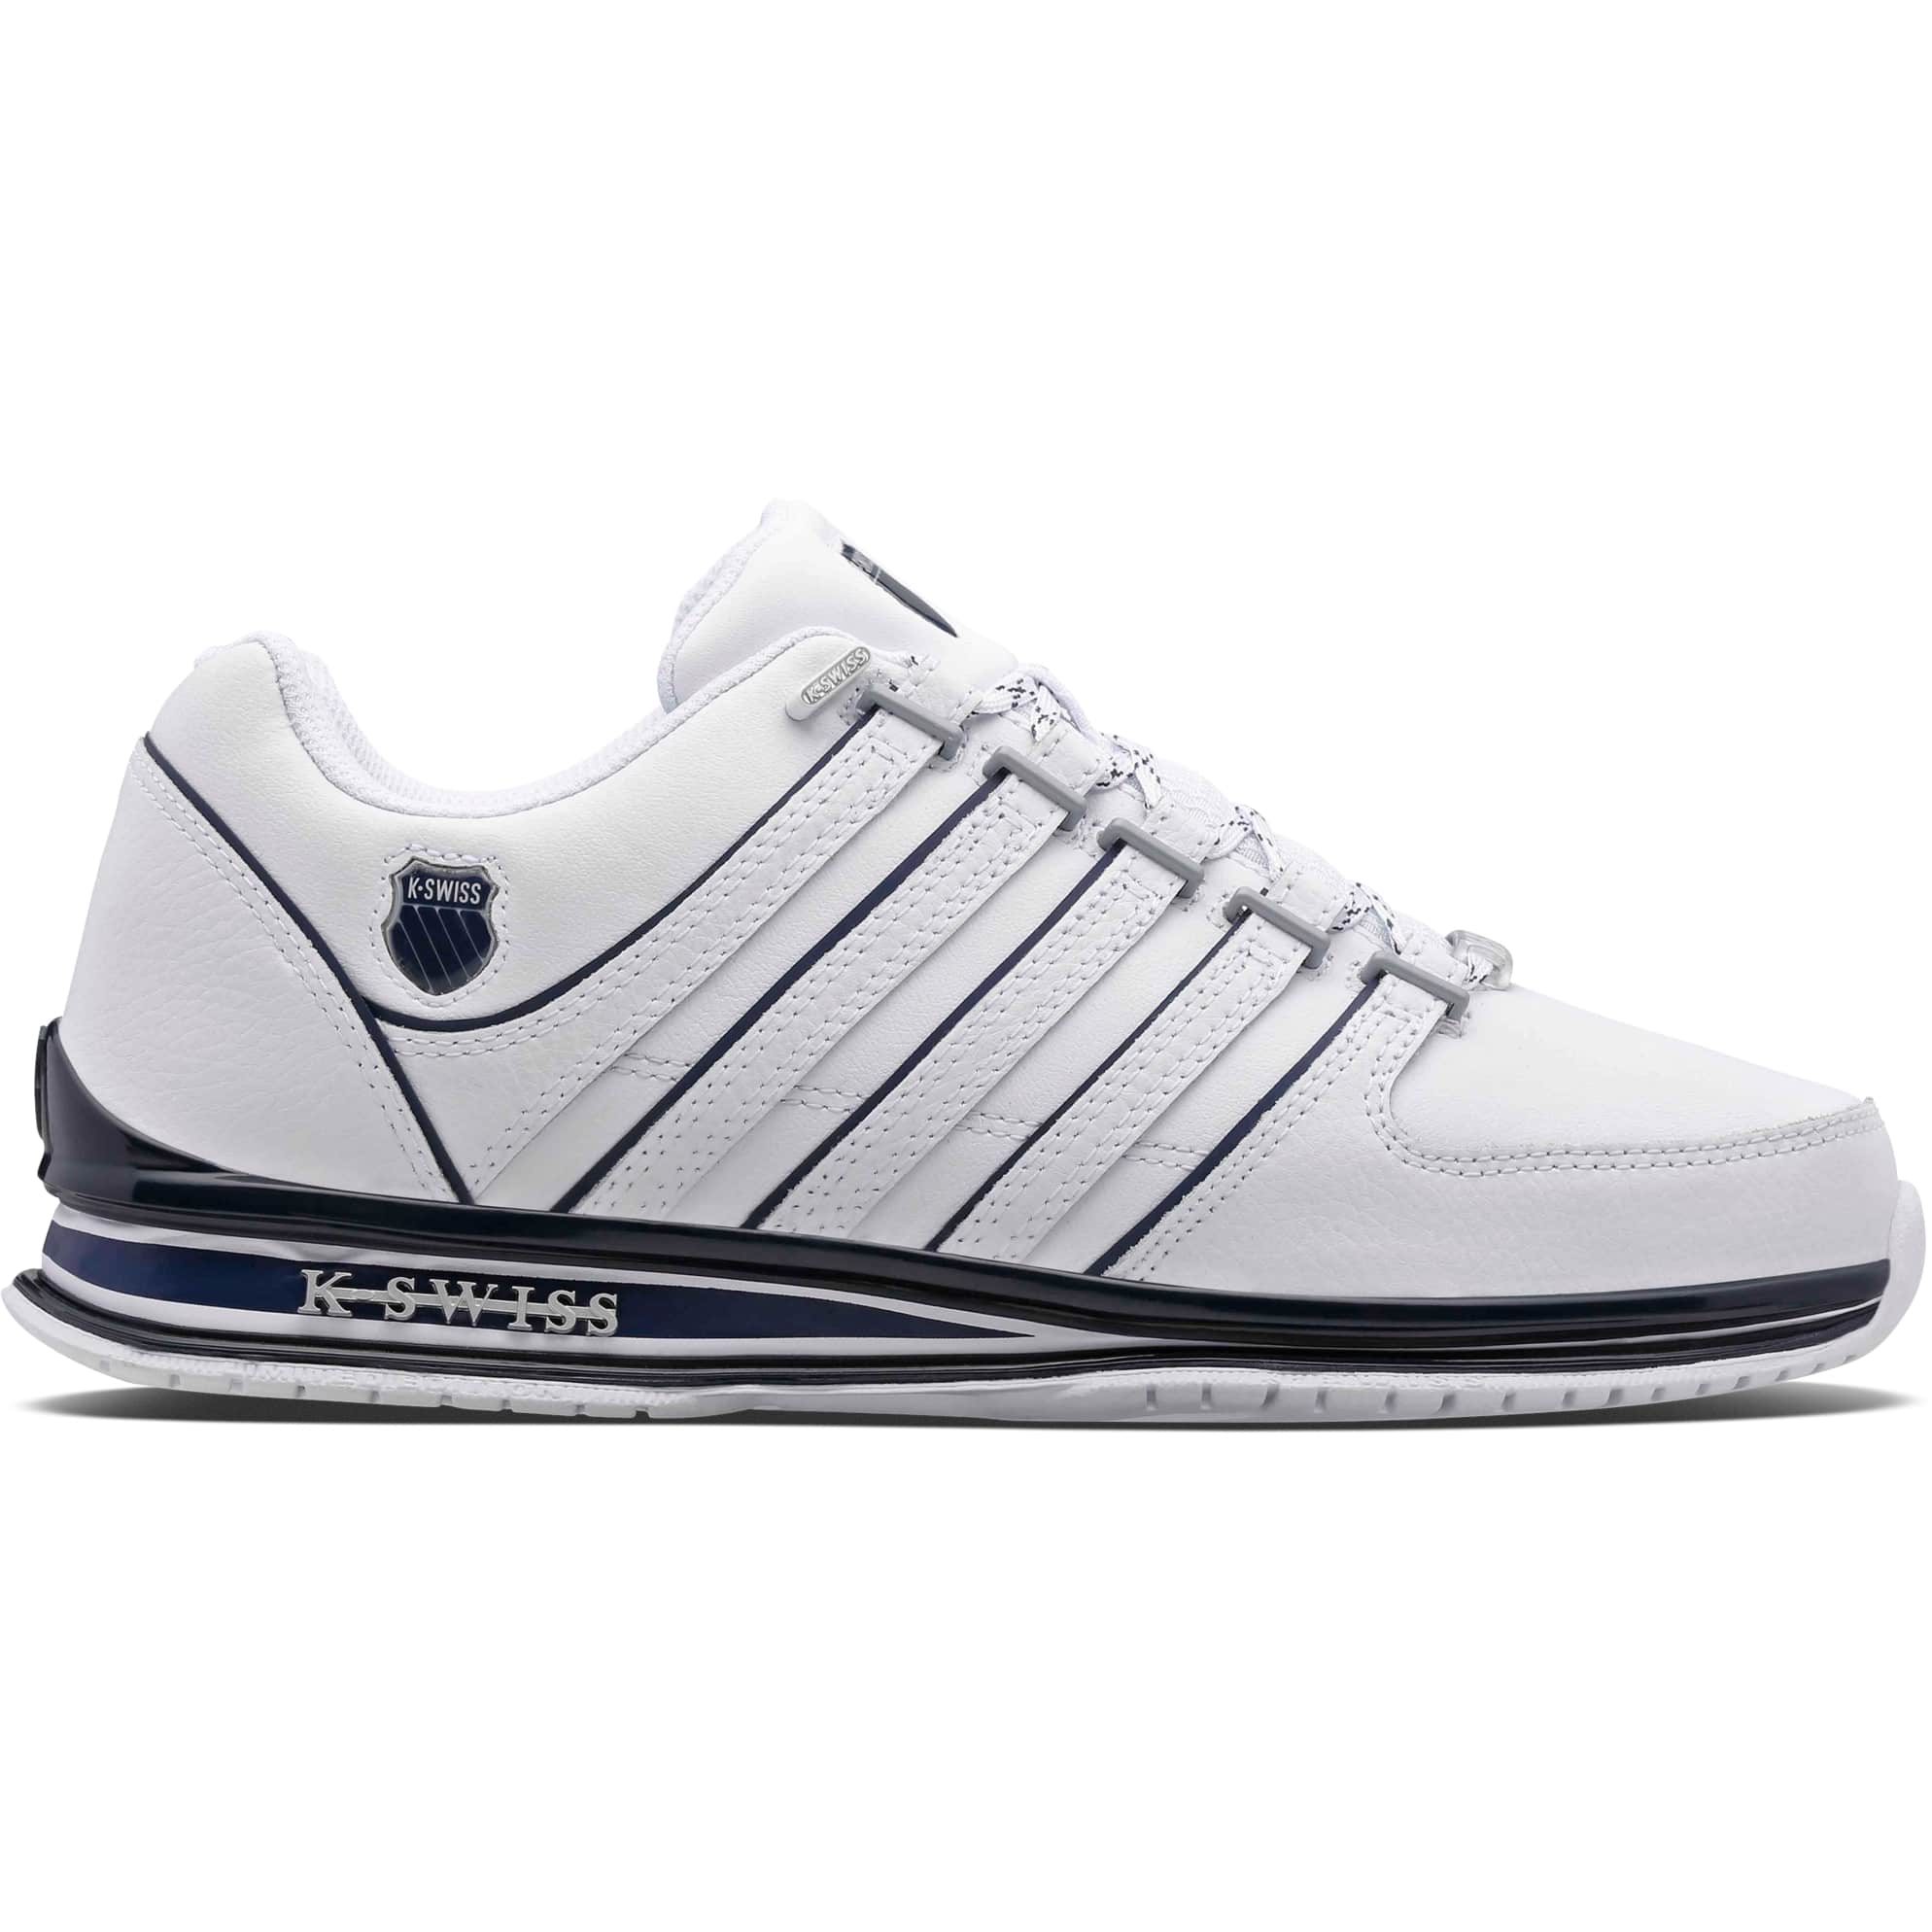 K-Swiss Mens Rinzler Trainers Shoes - UK 8 White 2951